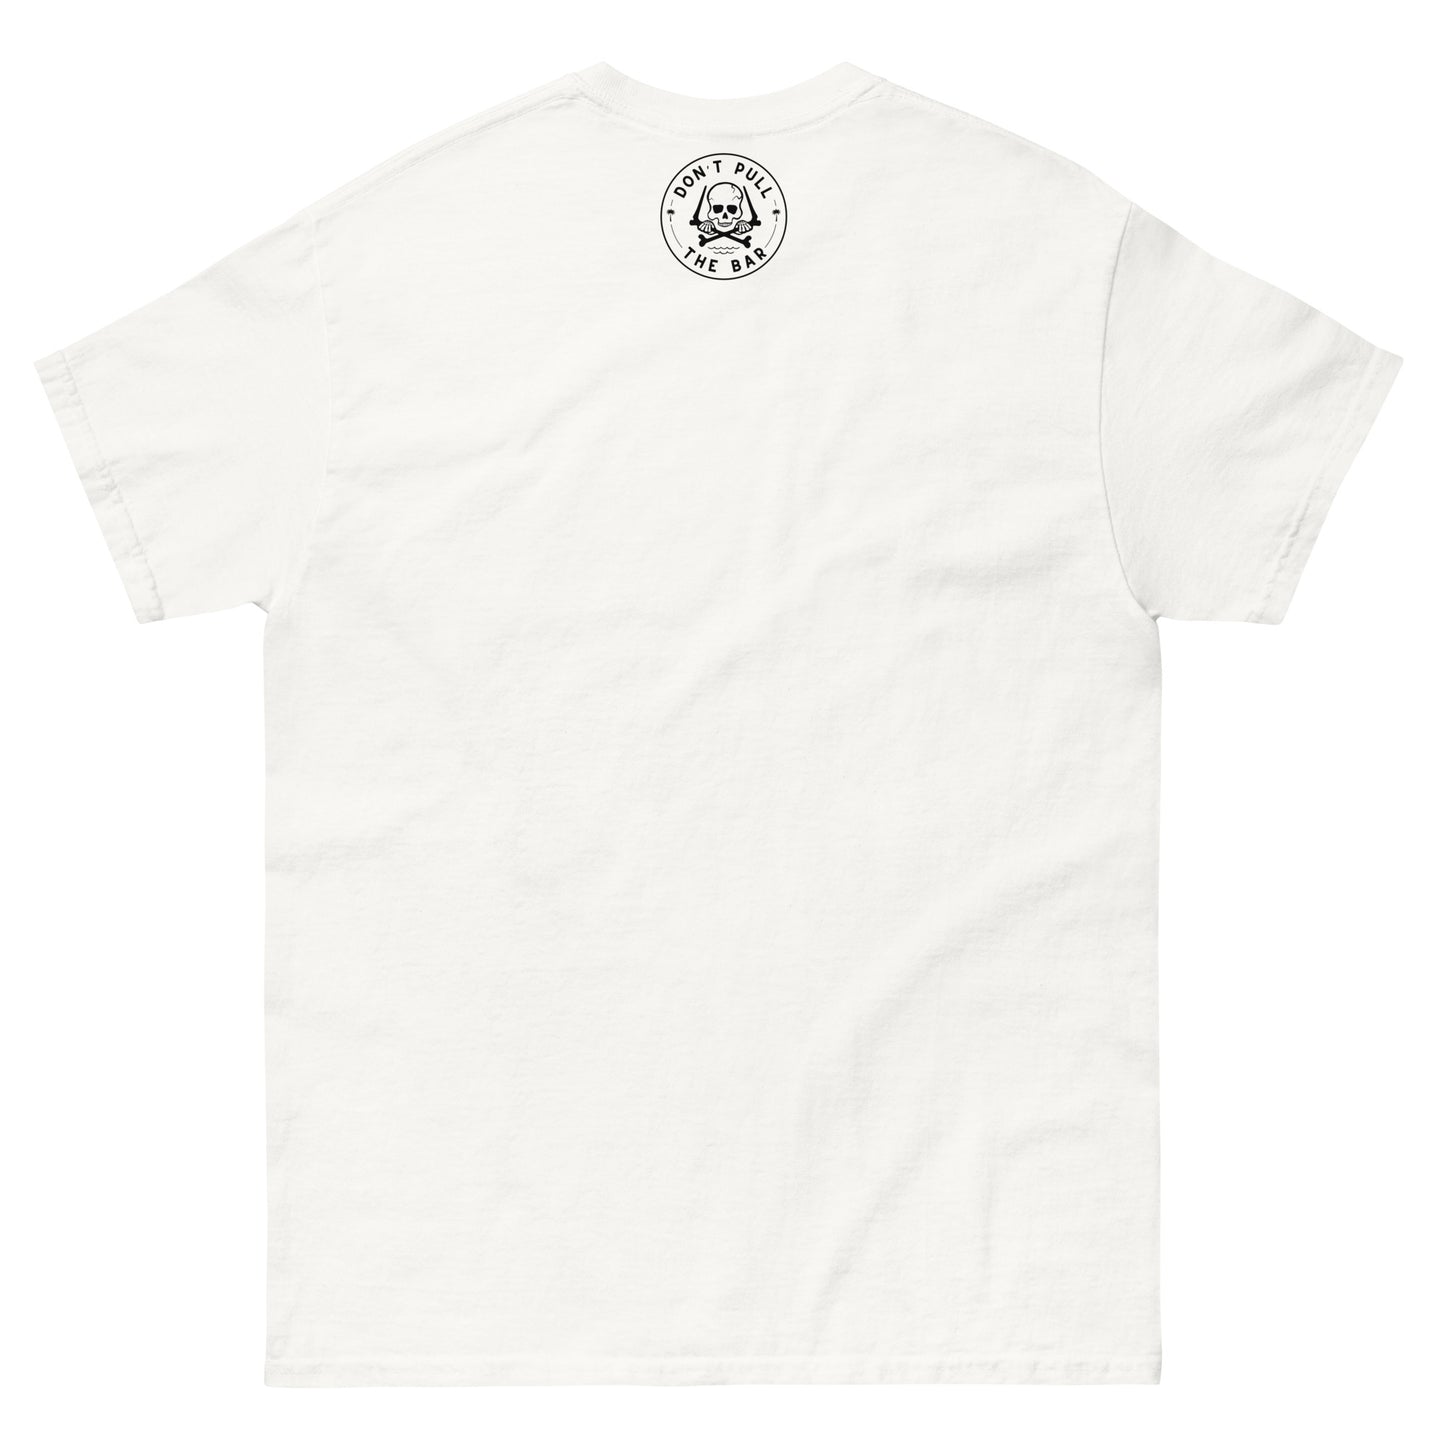 "DON'T PULL THE BAR" X "LO STAGNONE" Premium Kite-spots T-shirt